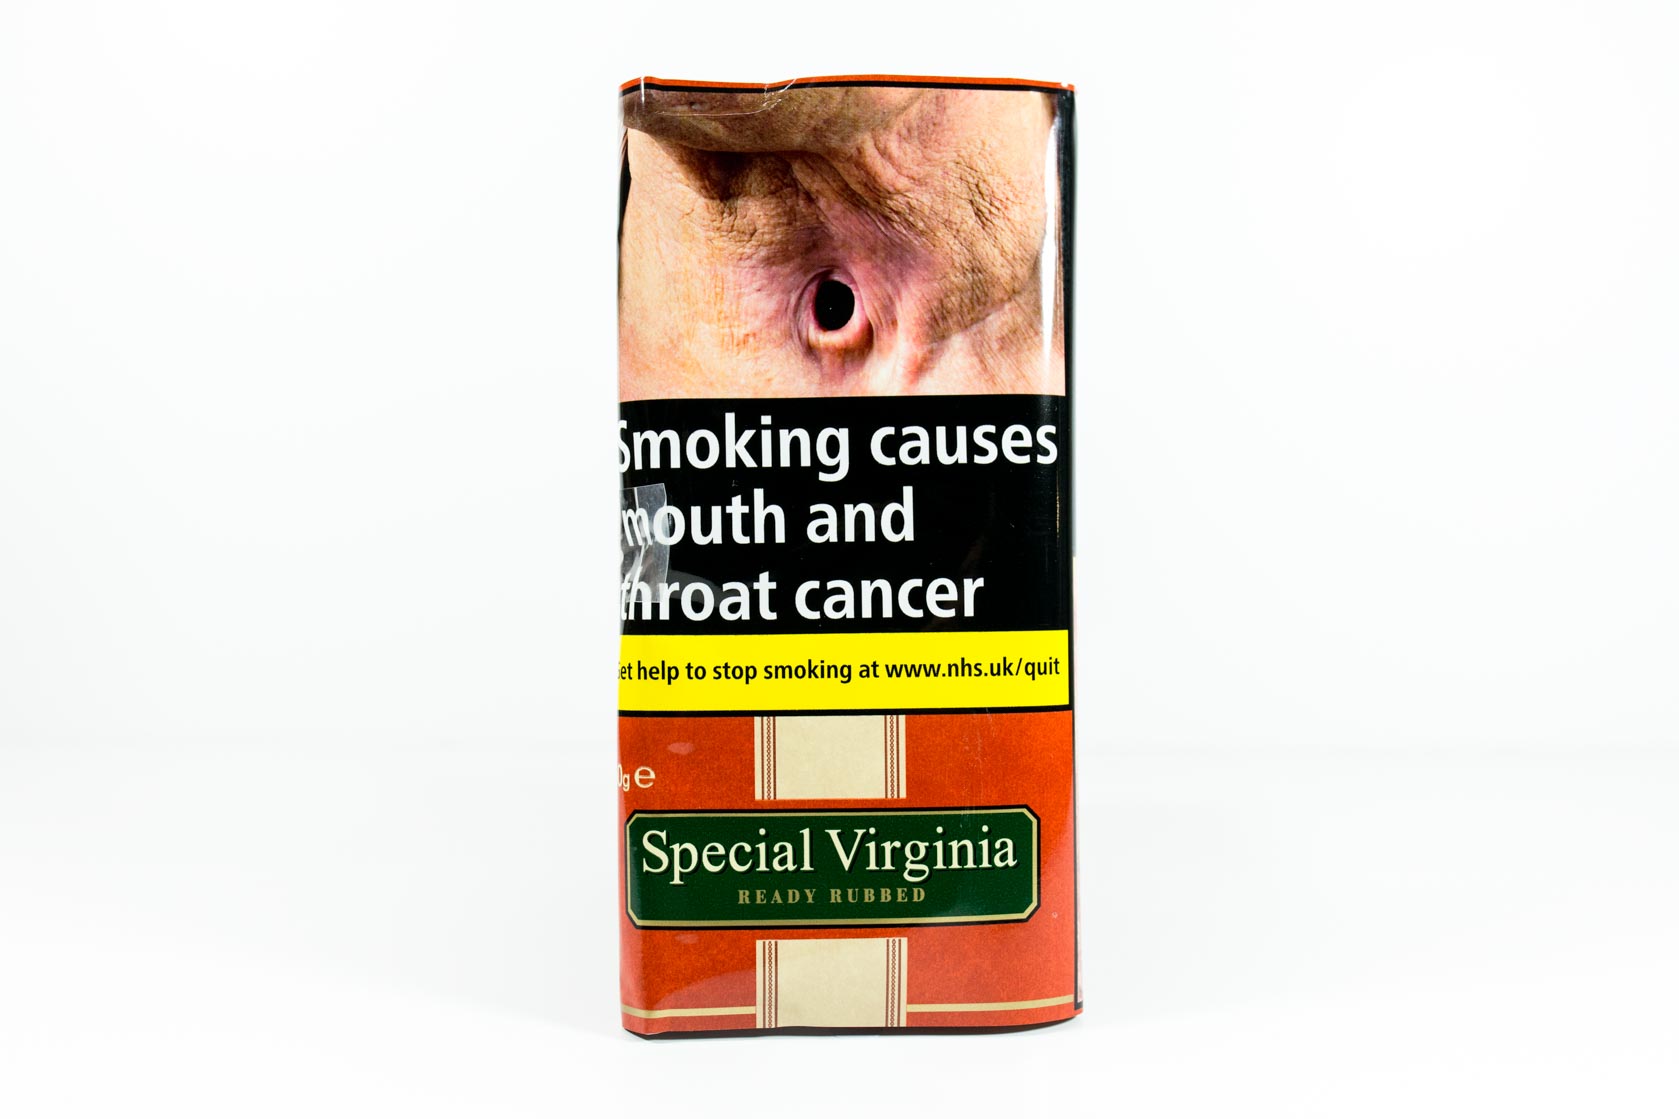 Special Virginia Ready Rubbed 50g Tobacco